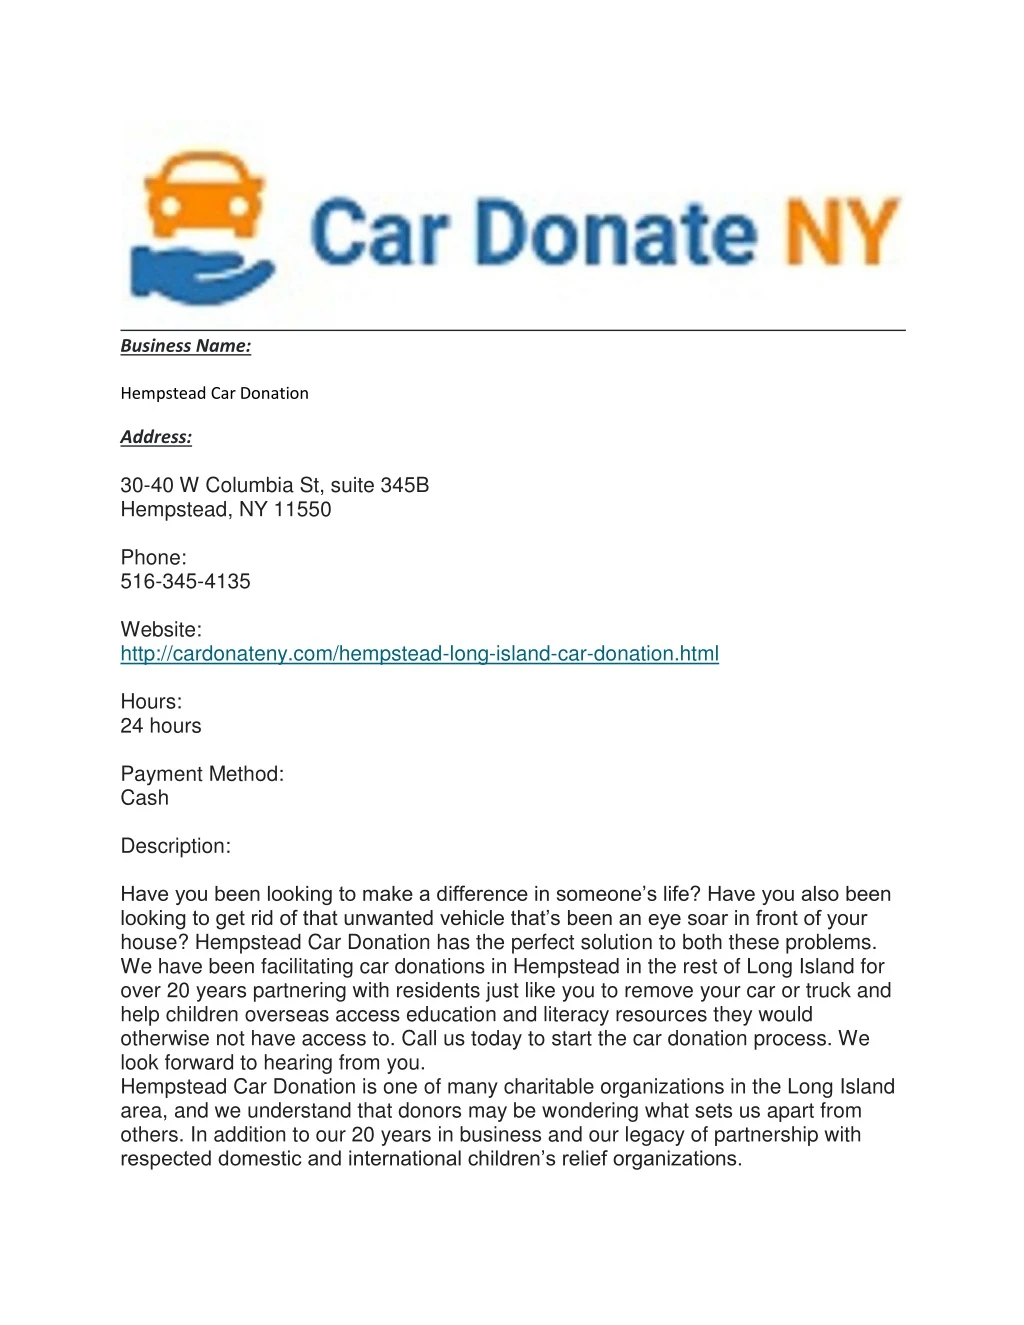 business name hempstead car donation